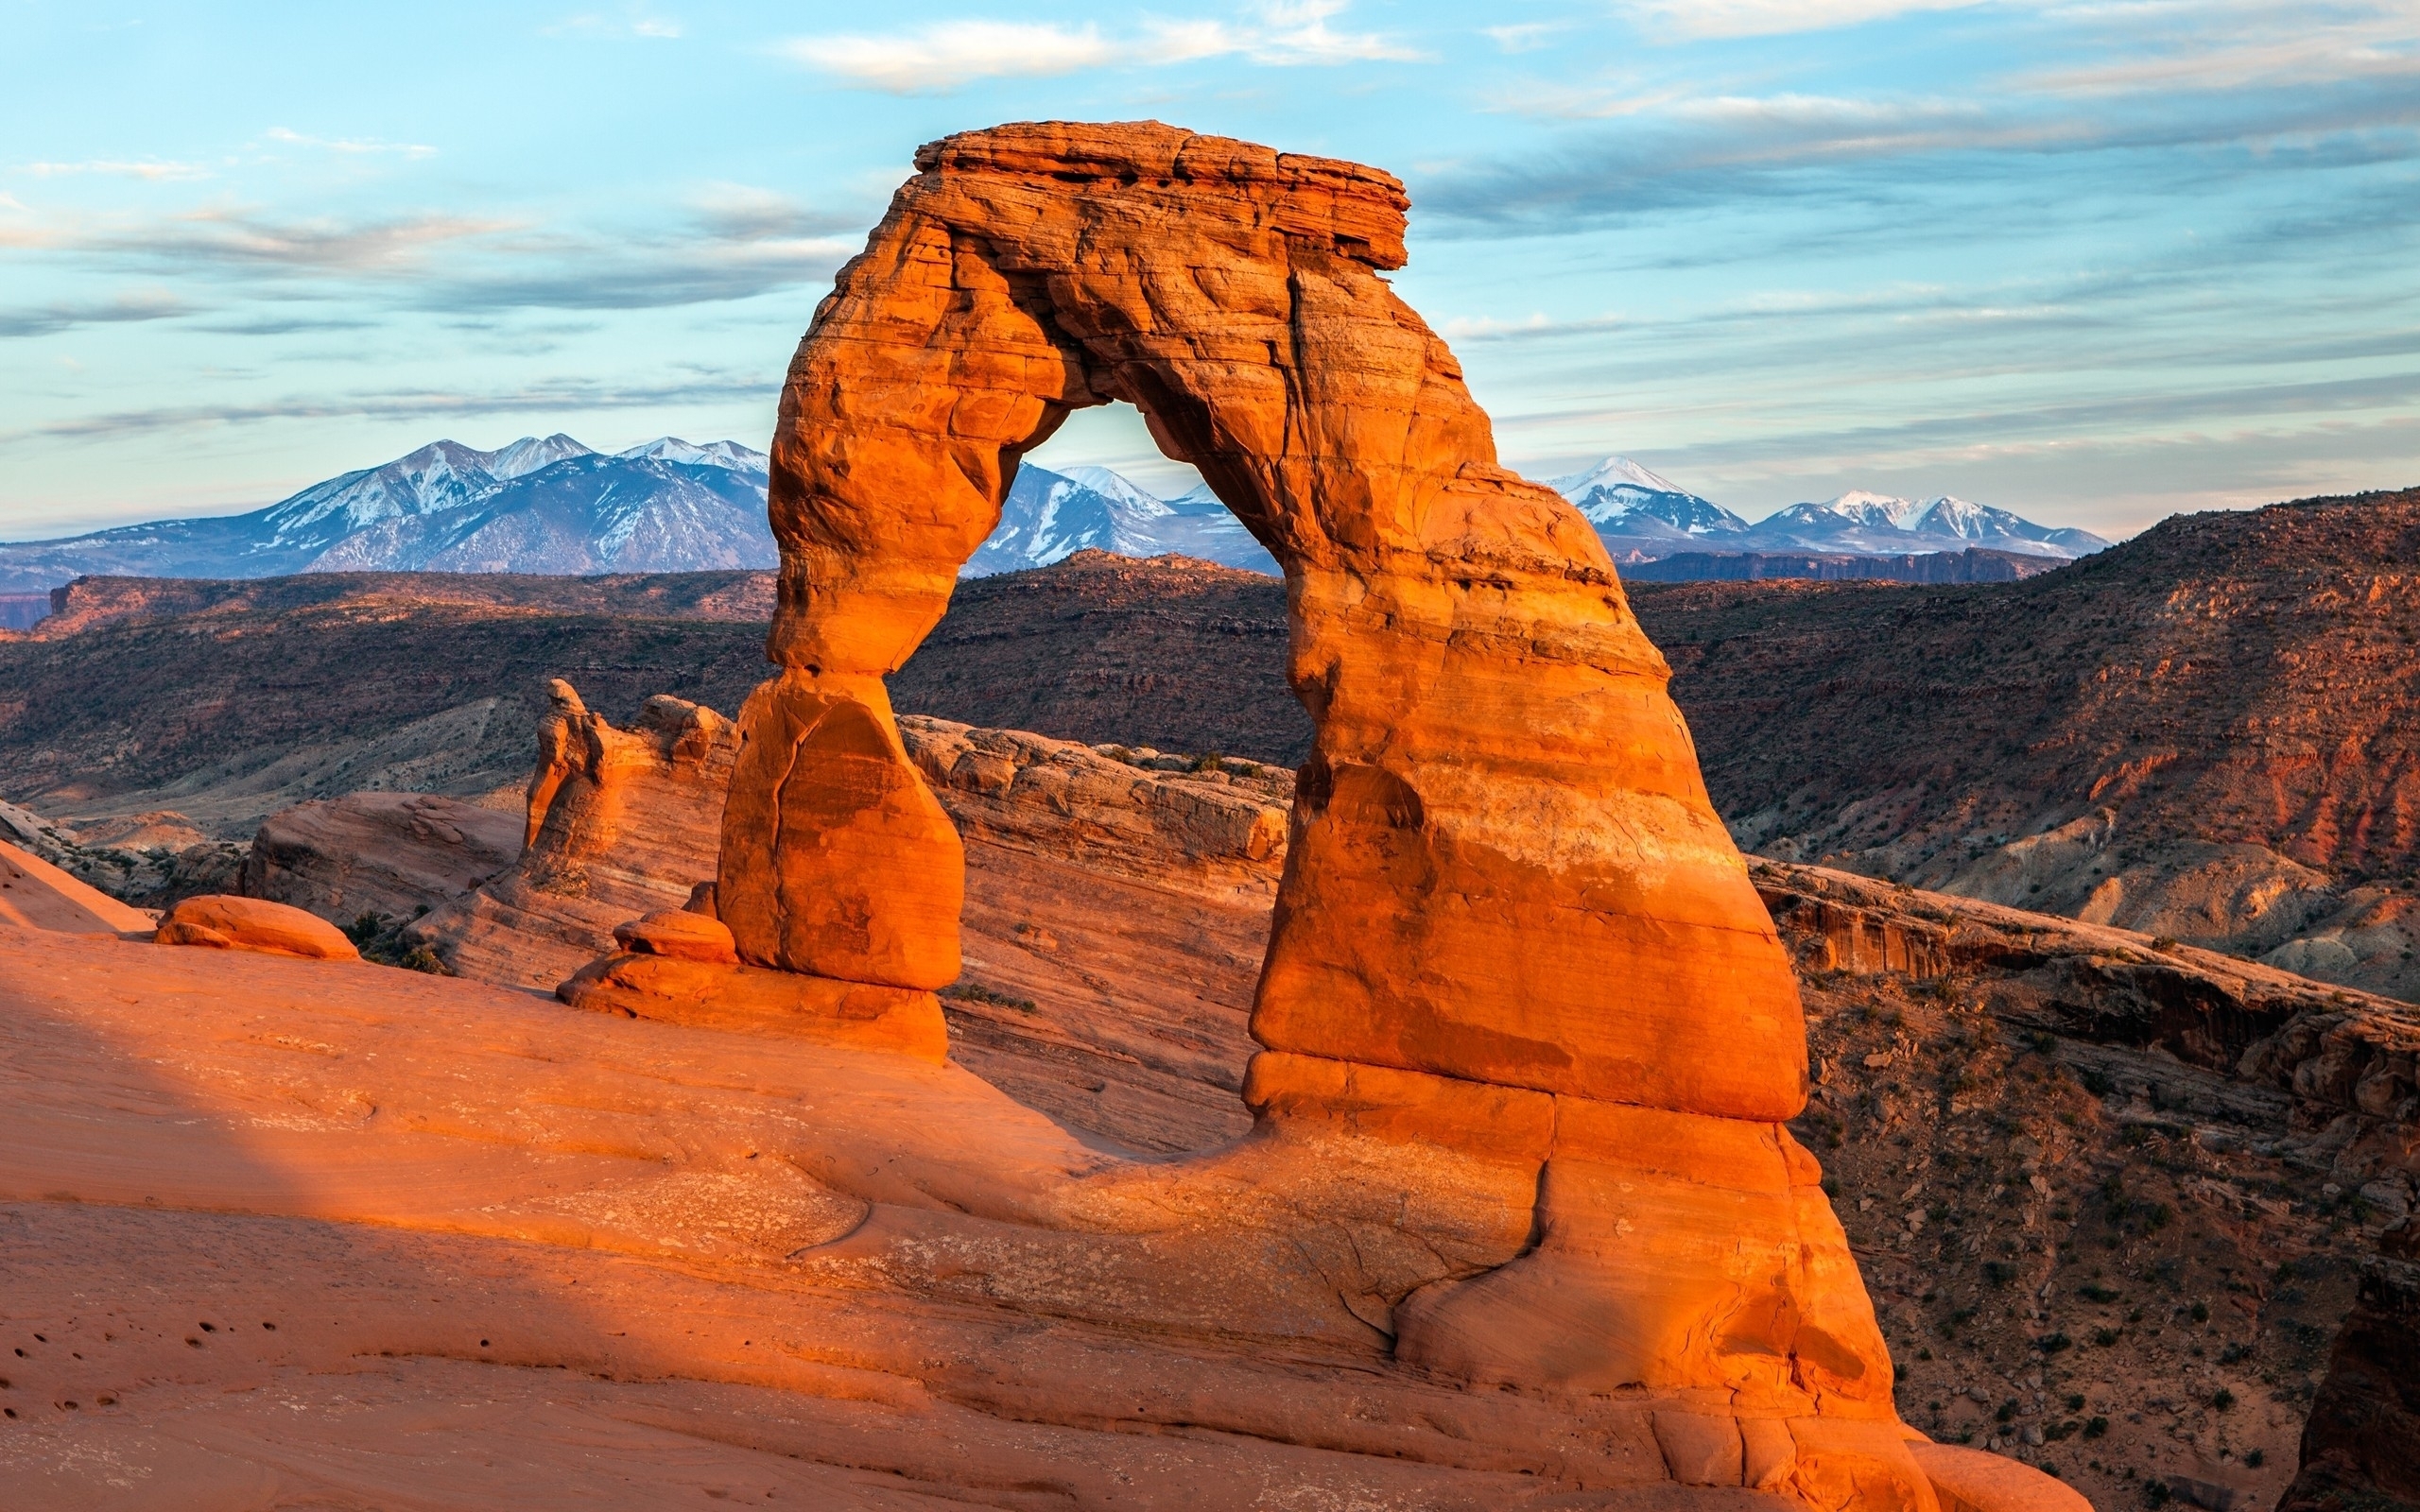  landscapes desert utah national park arches rock HD Wallpapers